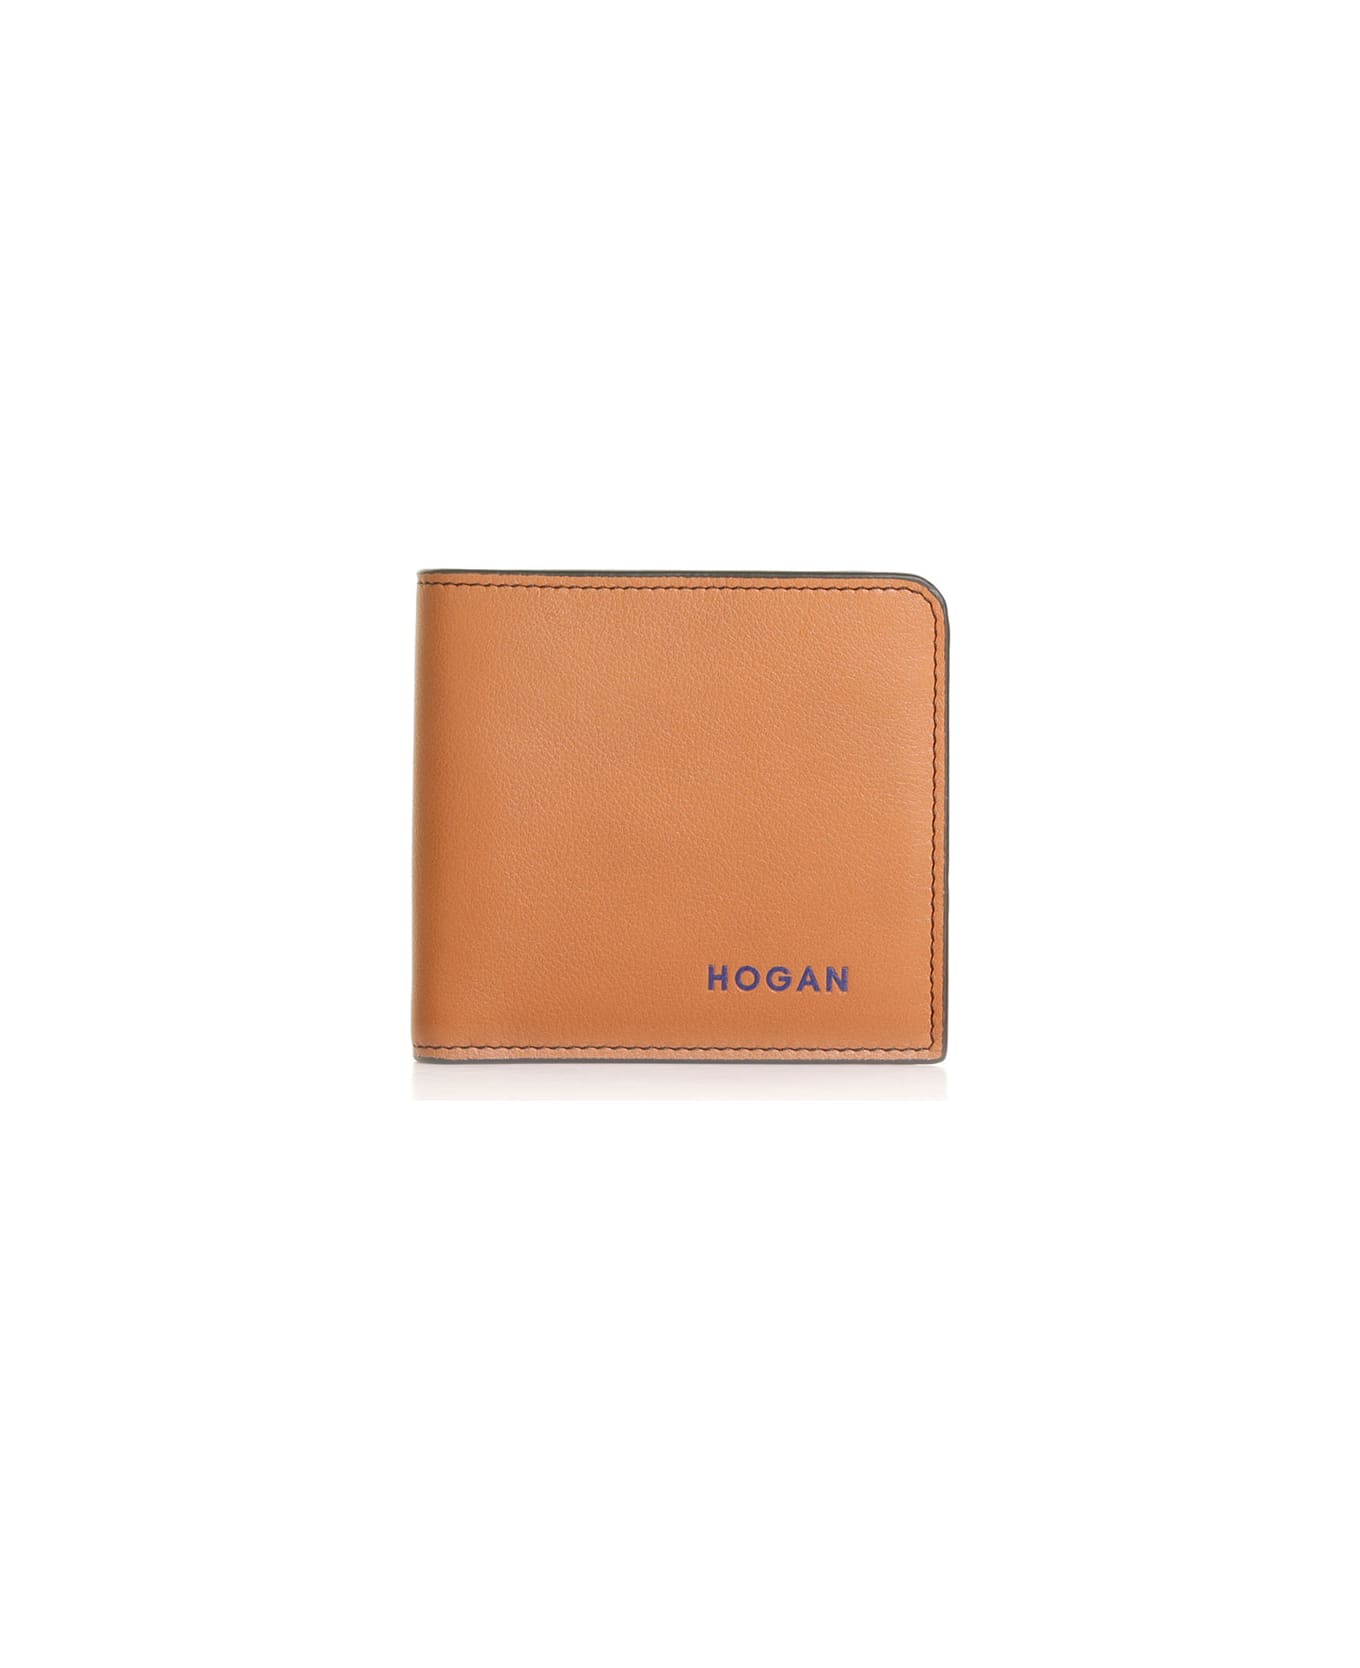 Hogan Leather Wallet With Logo - BRANDY  CHIARO